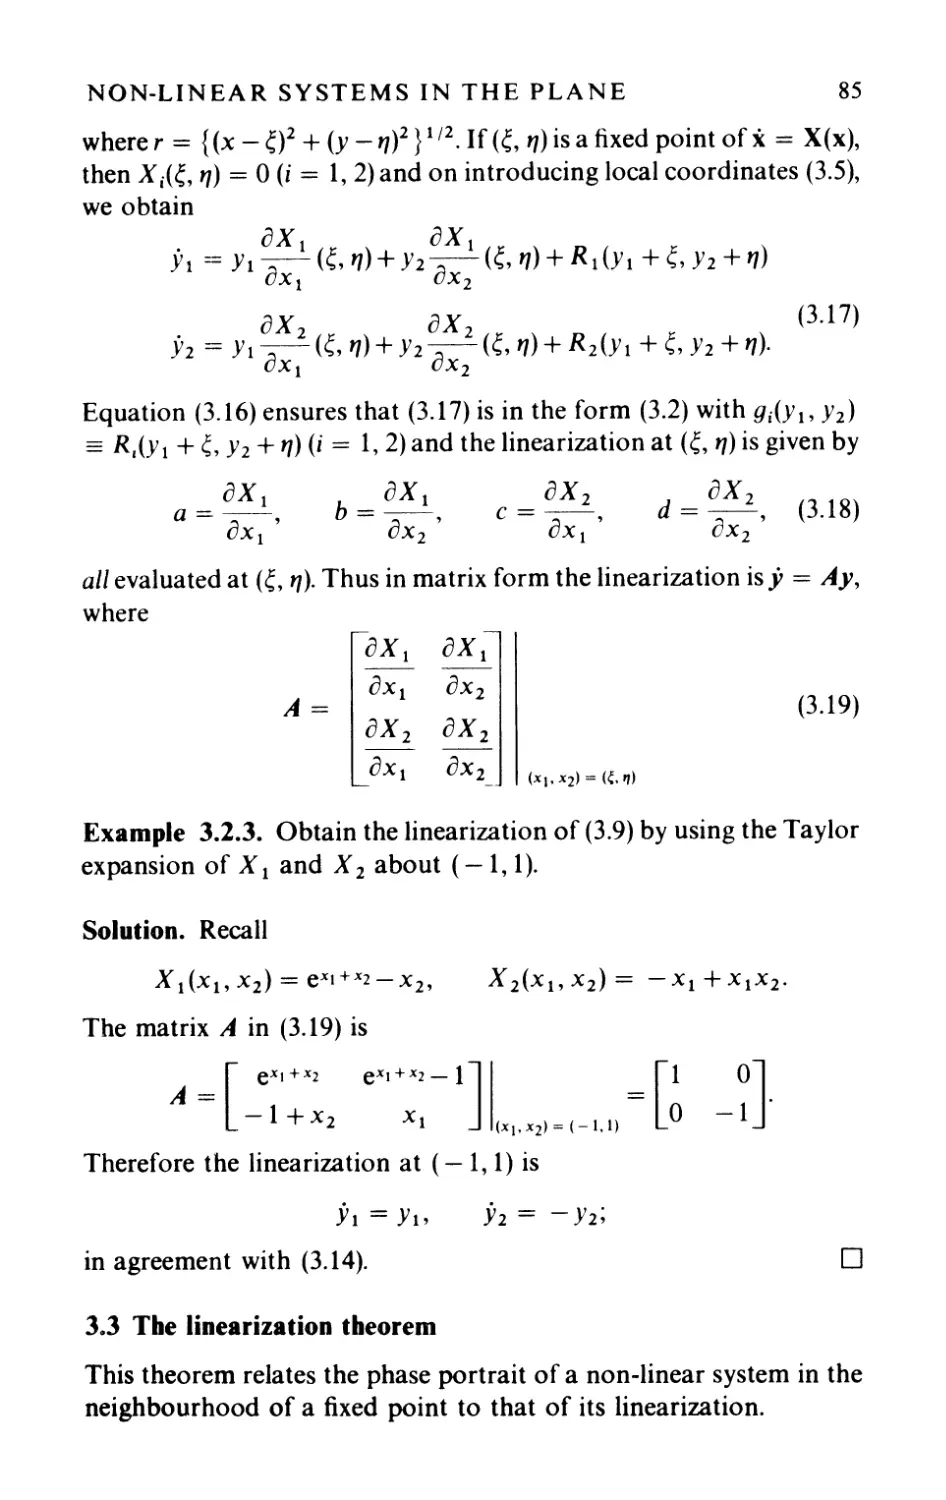 3.3 The linearization theorem